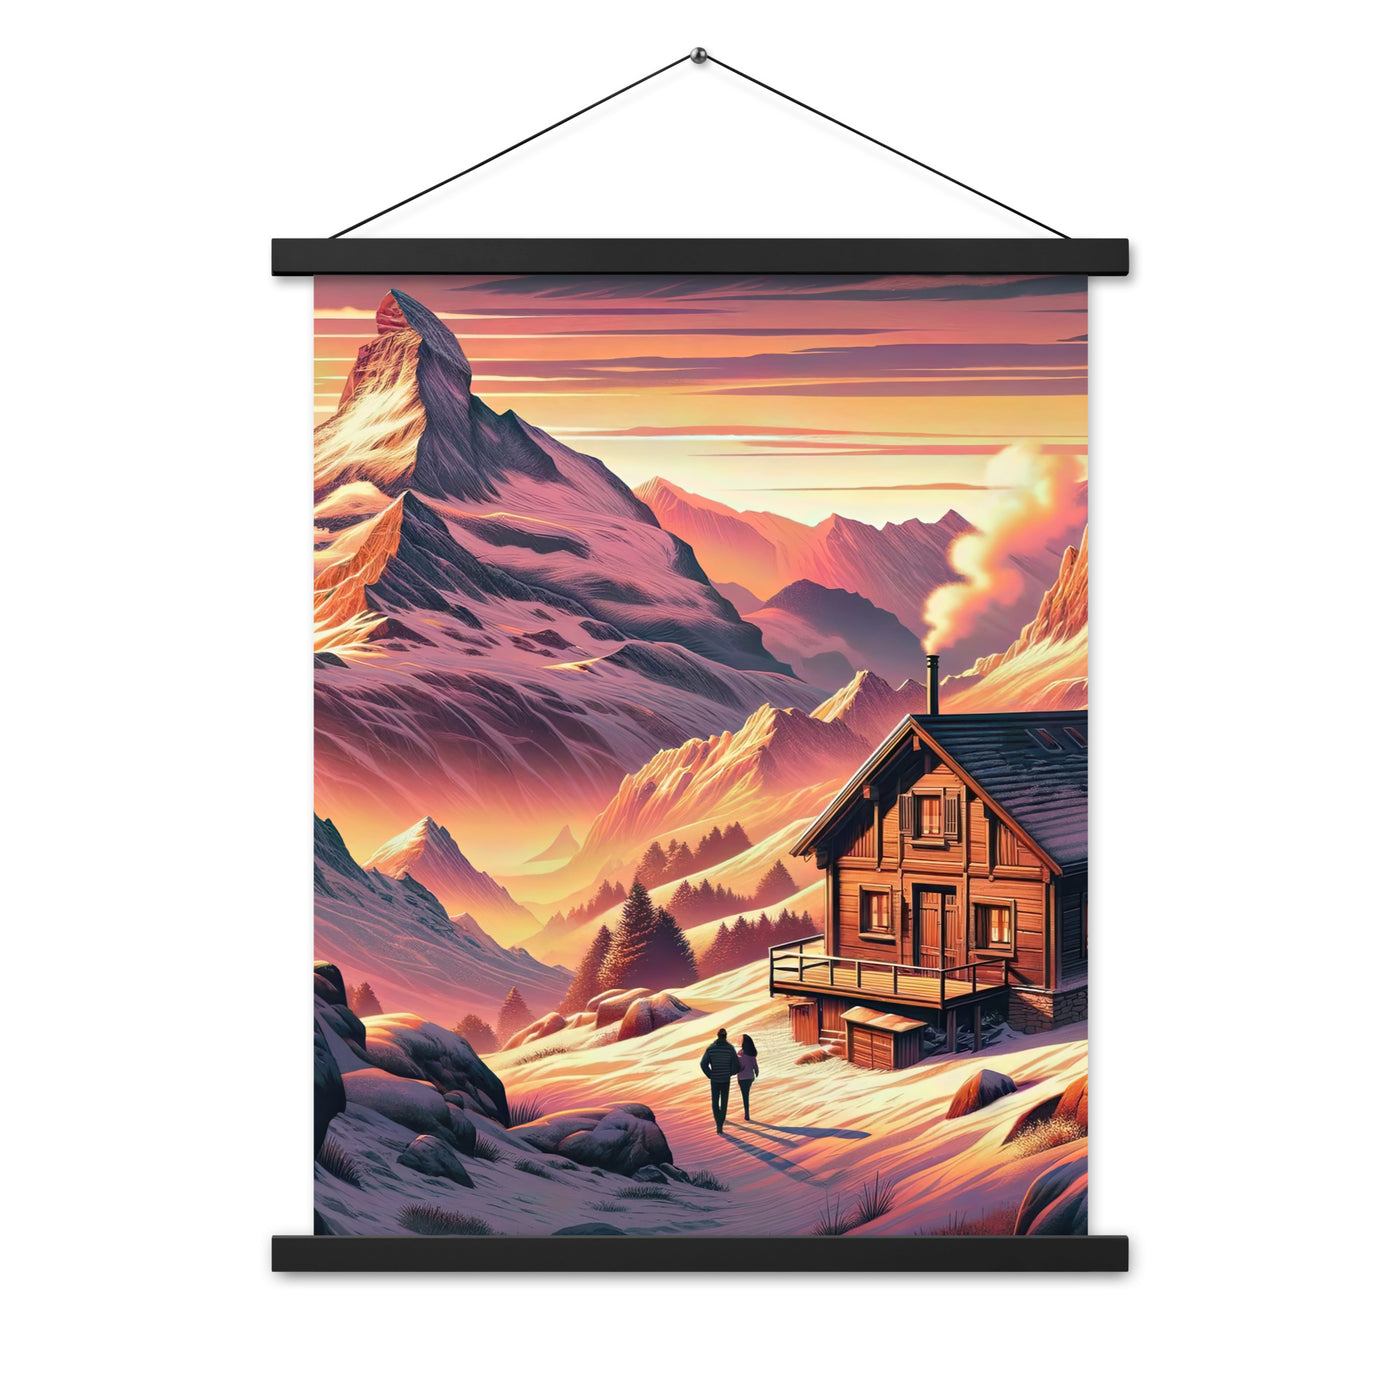 Berghütte im goldenen Sonnenuntergang: Digitale Alpenillustration - Premium Poster mit Aufhängung berge xxx yyy zzz 45.7 x 61 cm